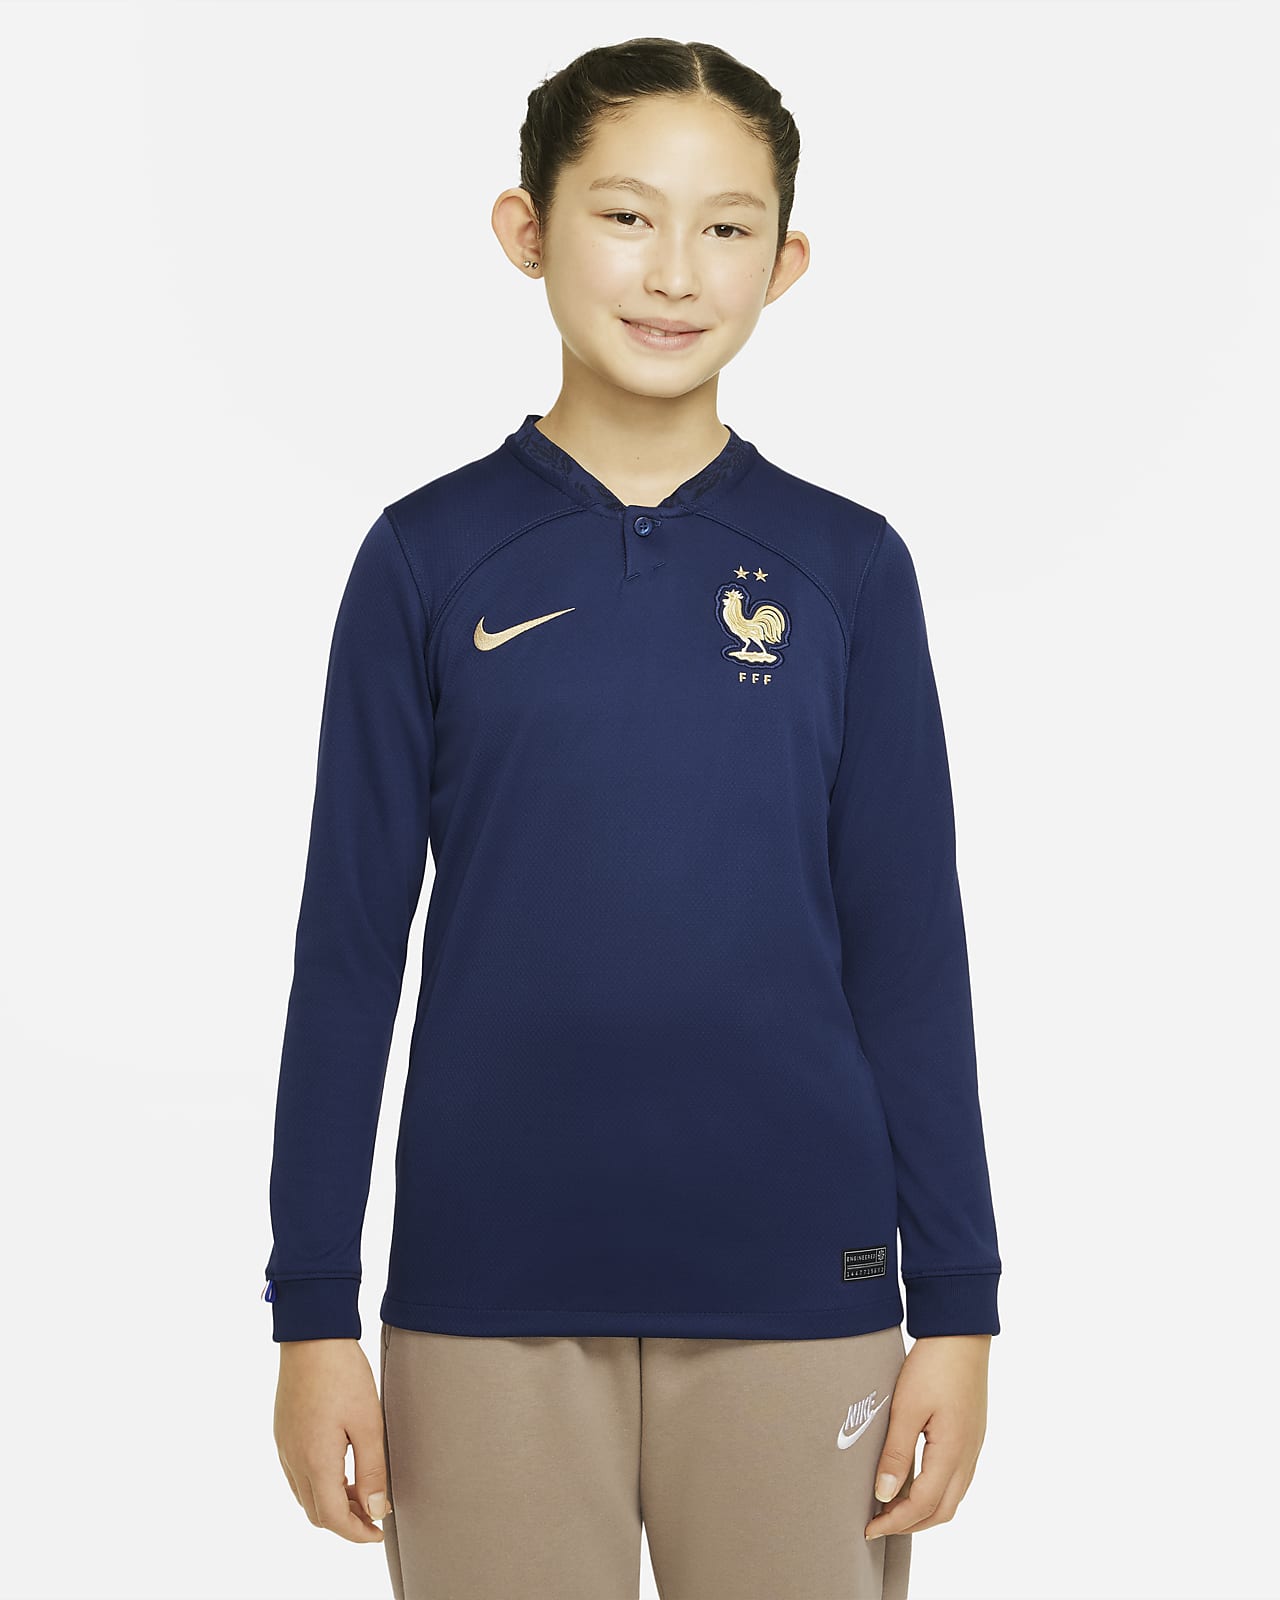 FFF 2022/23 Stadium Home Older Kids' Nike Dri-FIT Long-Sleeve Football Shirt